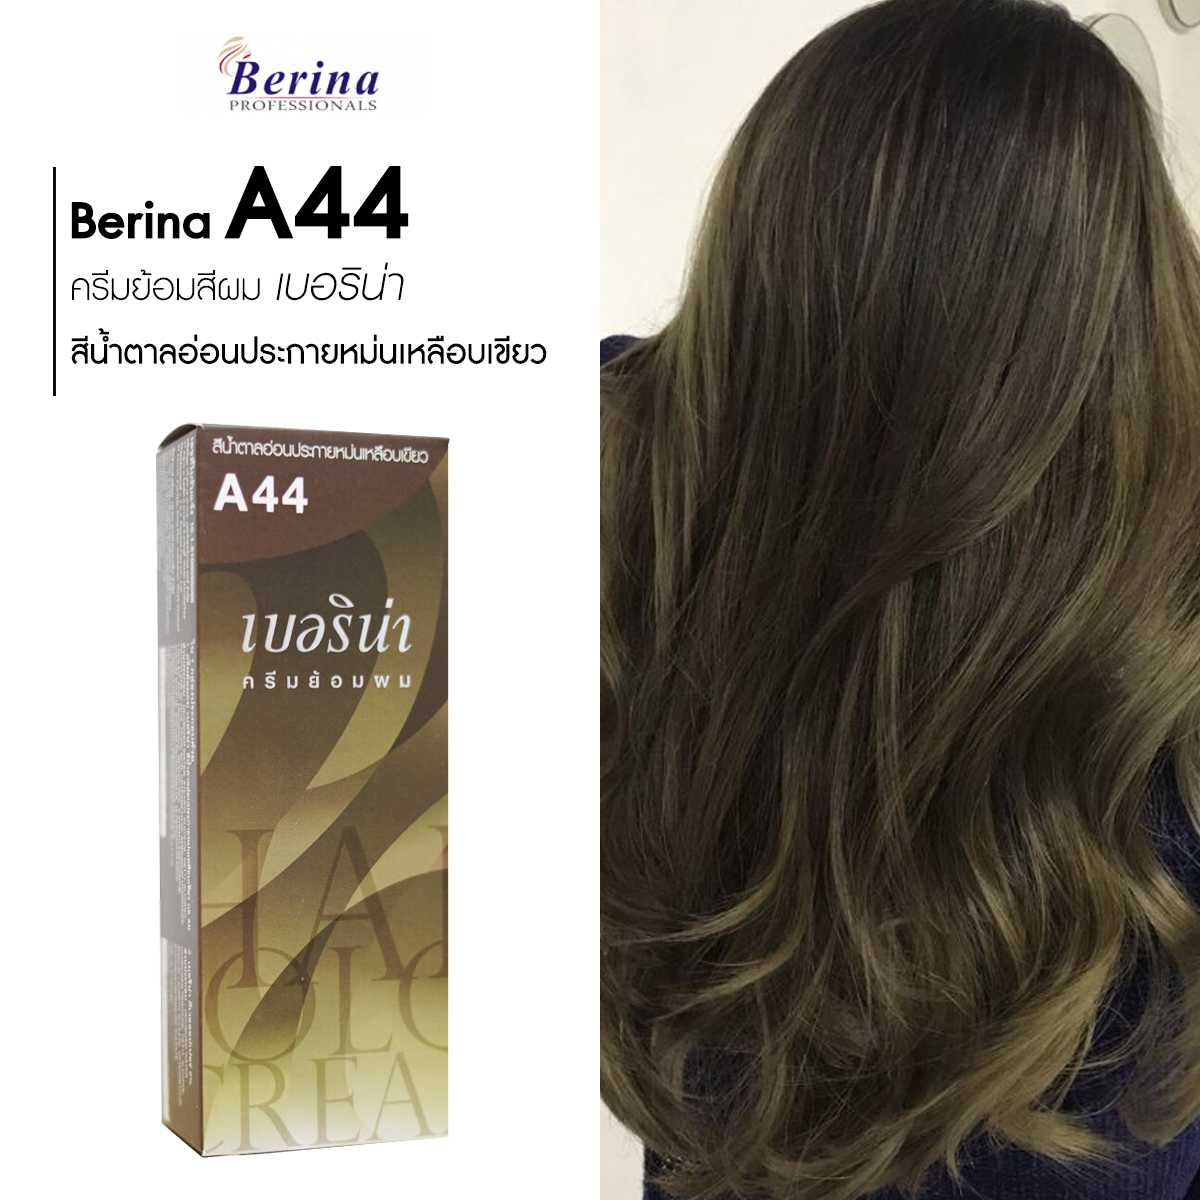 Berina A44 สีน้ำตาลอ่อนประกายหม่นเหลือบเขียว | Line Shopping